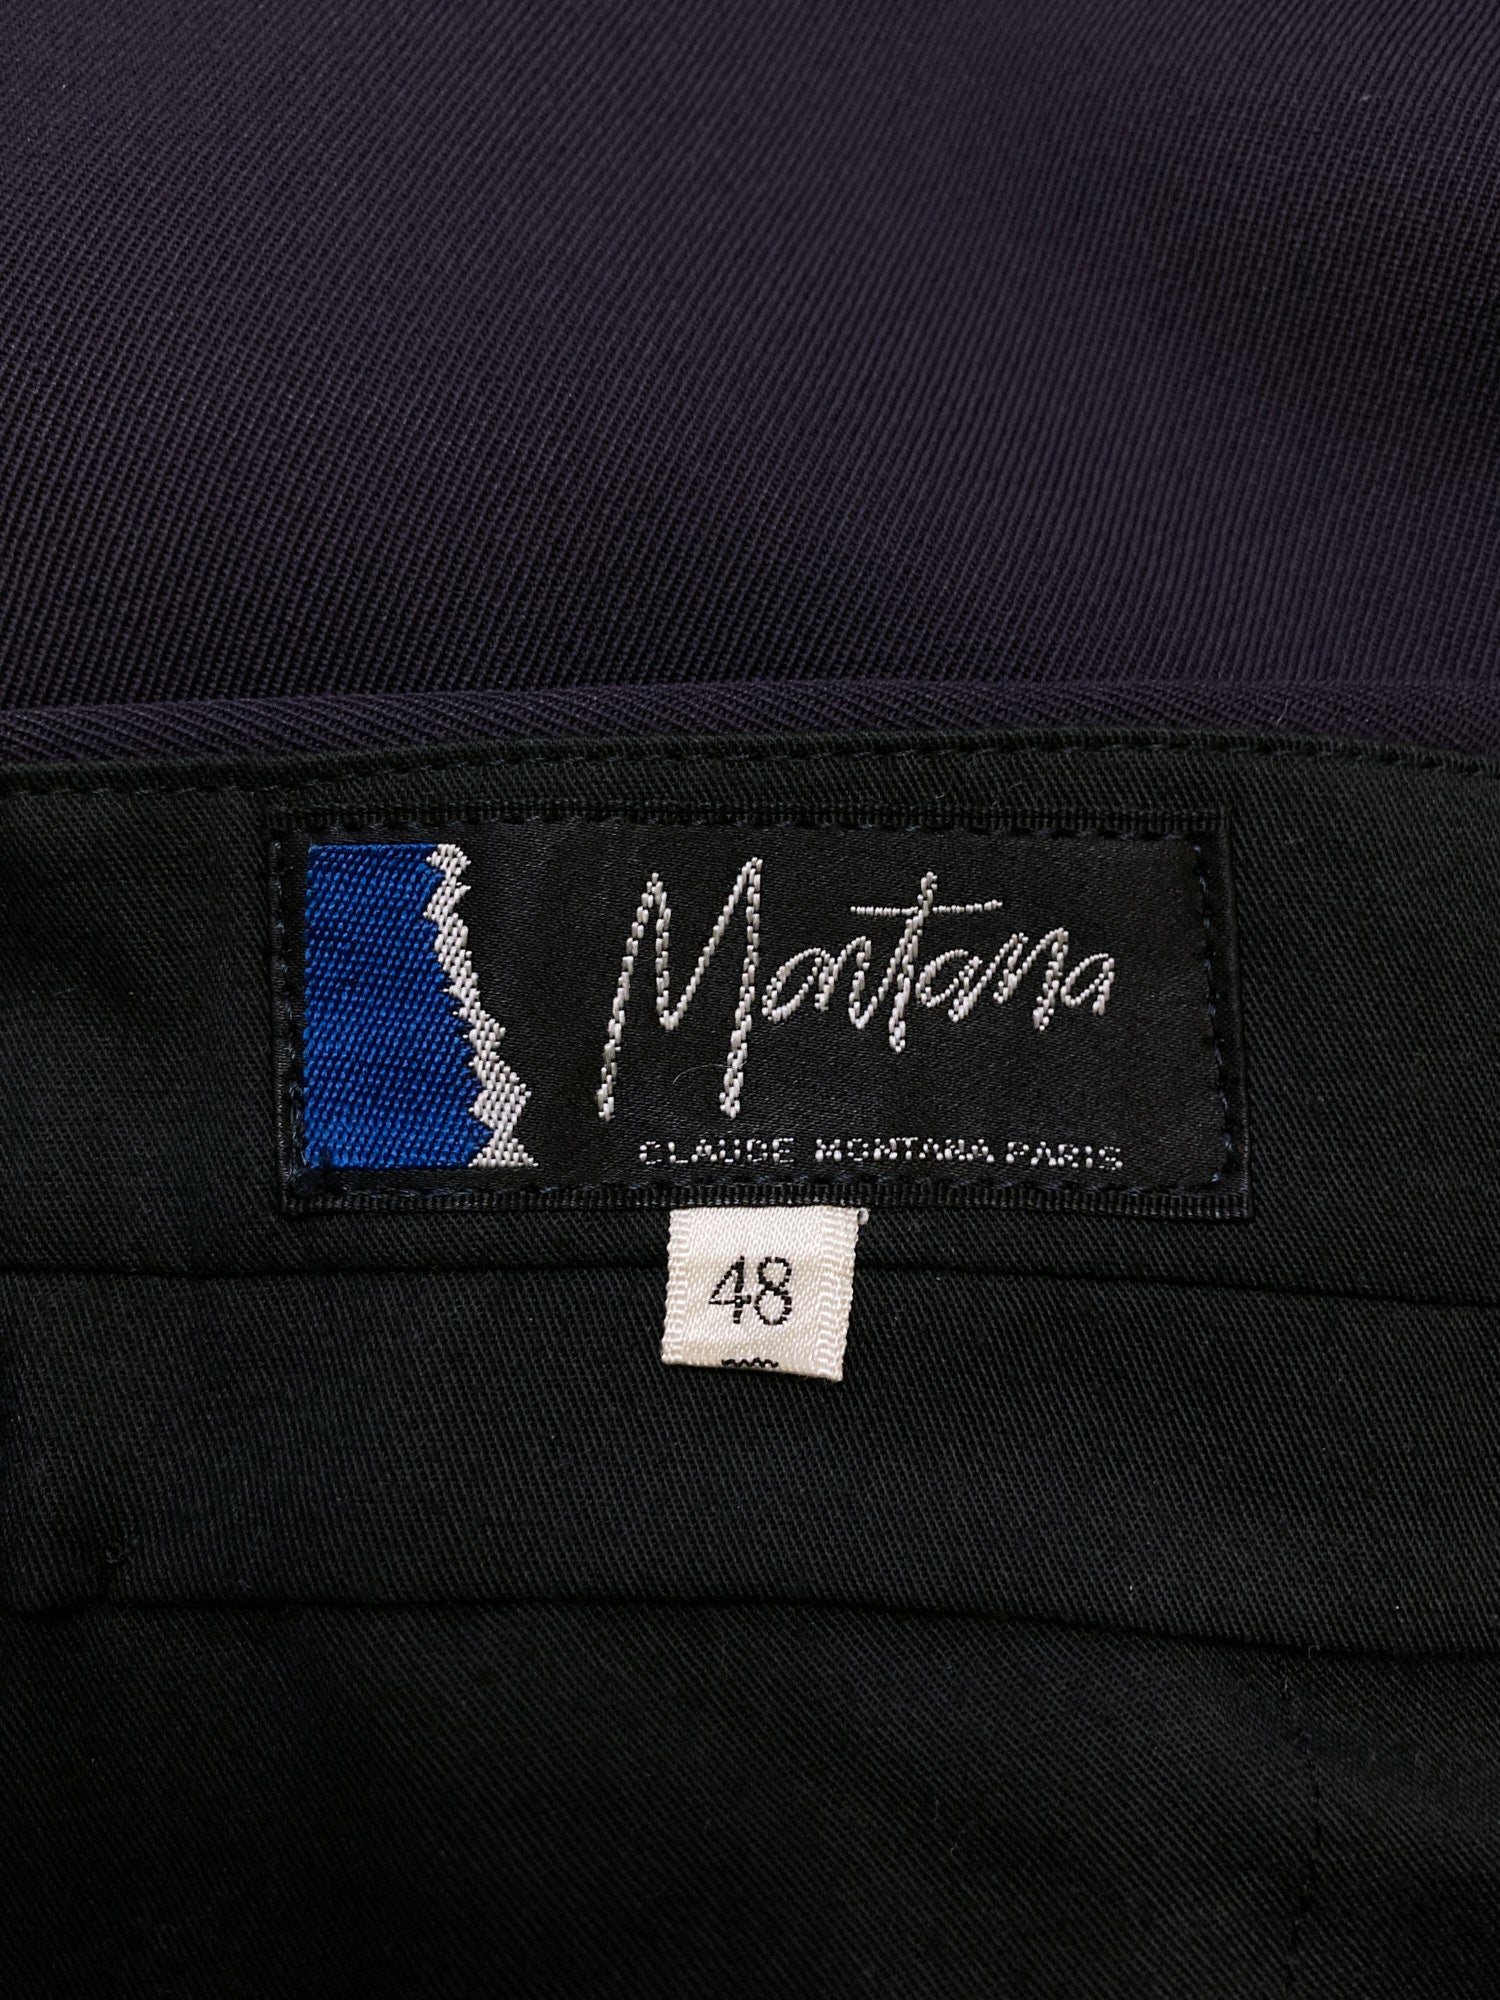 Claude Montana 1990s dark purple wool gabardine pleated trousers - mens 48 S